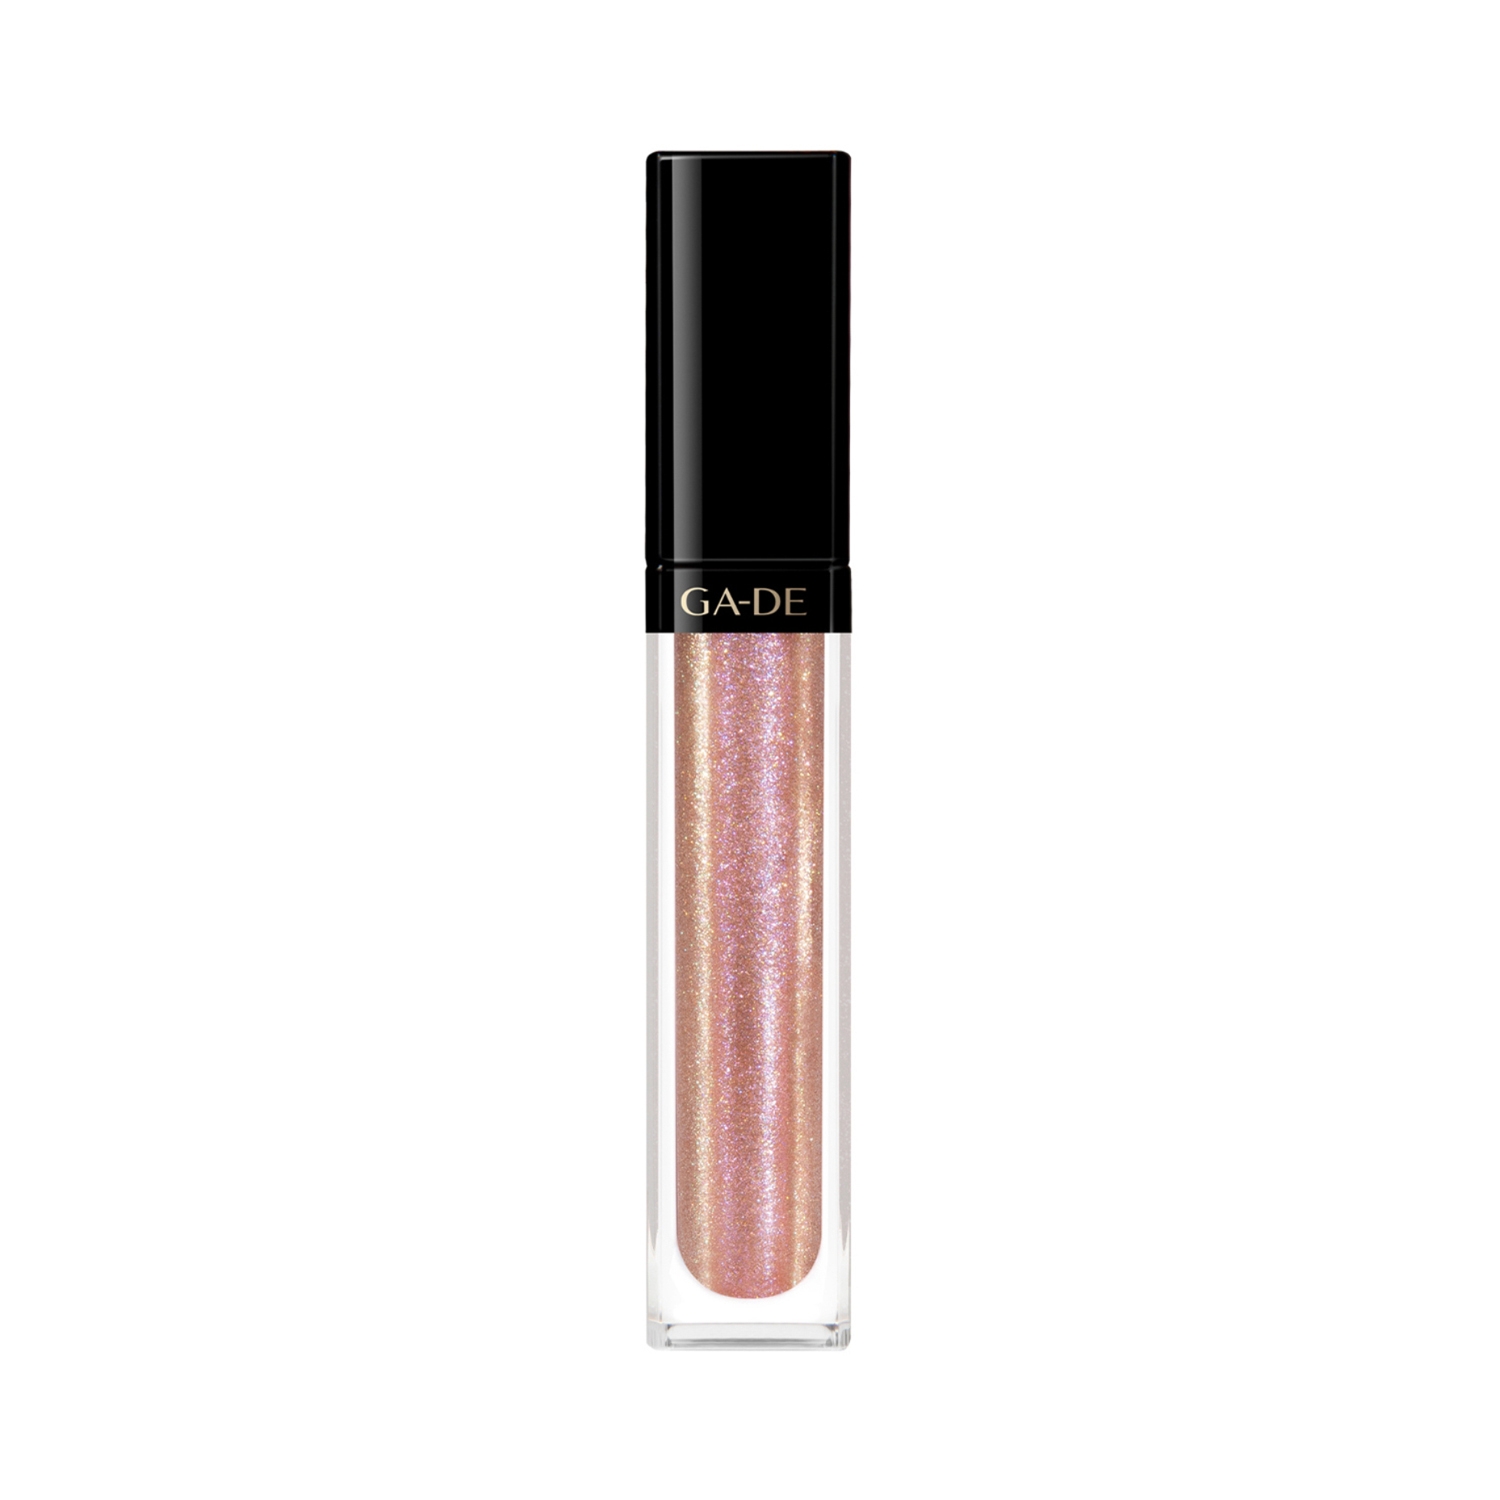 GA-DE | GA-DE Crystal Lights Lip Gloss - 800 Pink Unicorn (6ml)